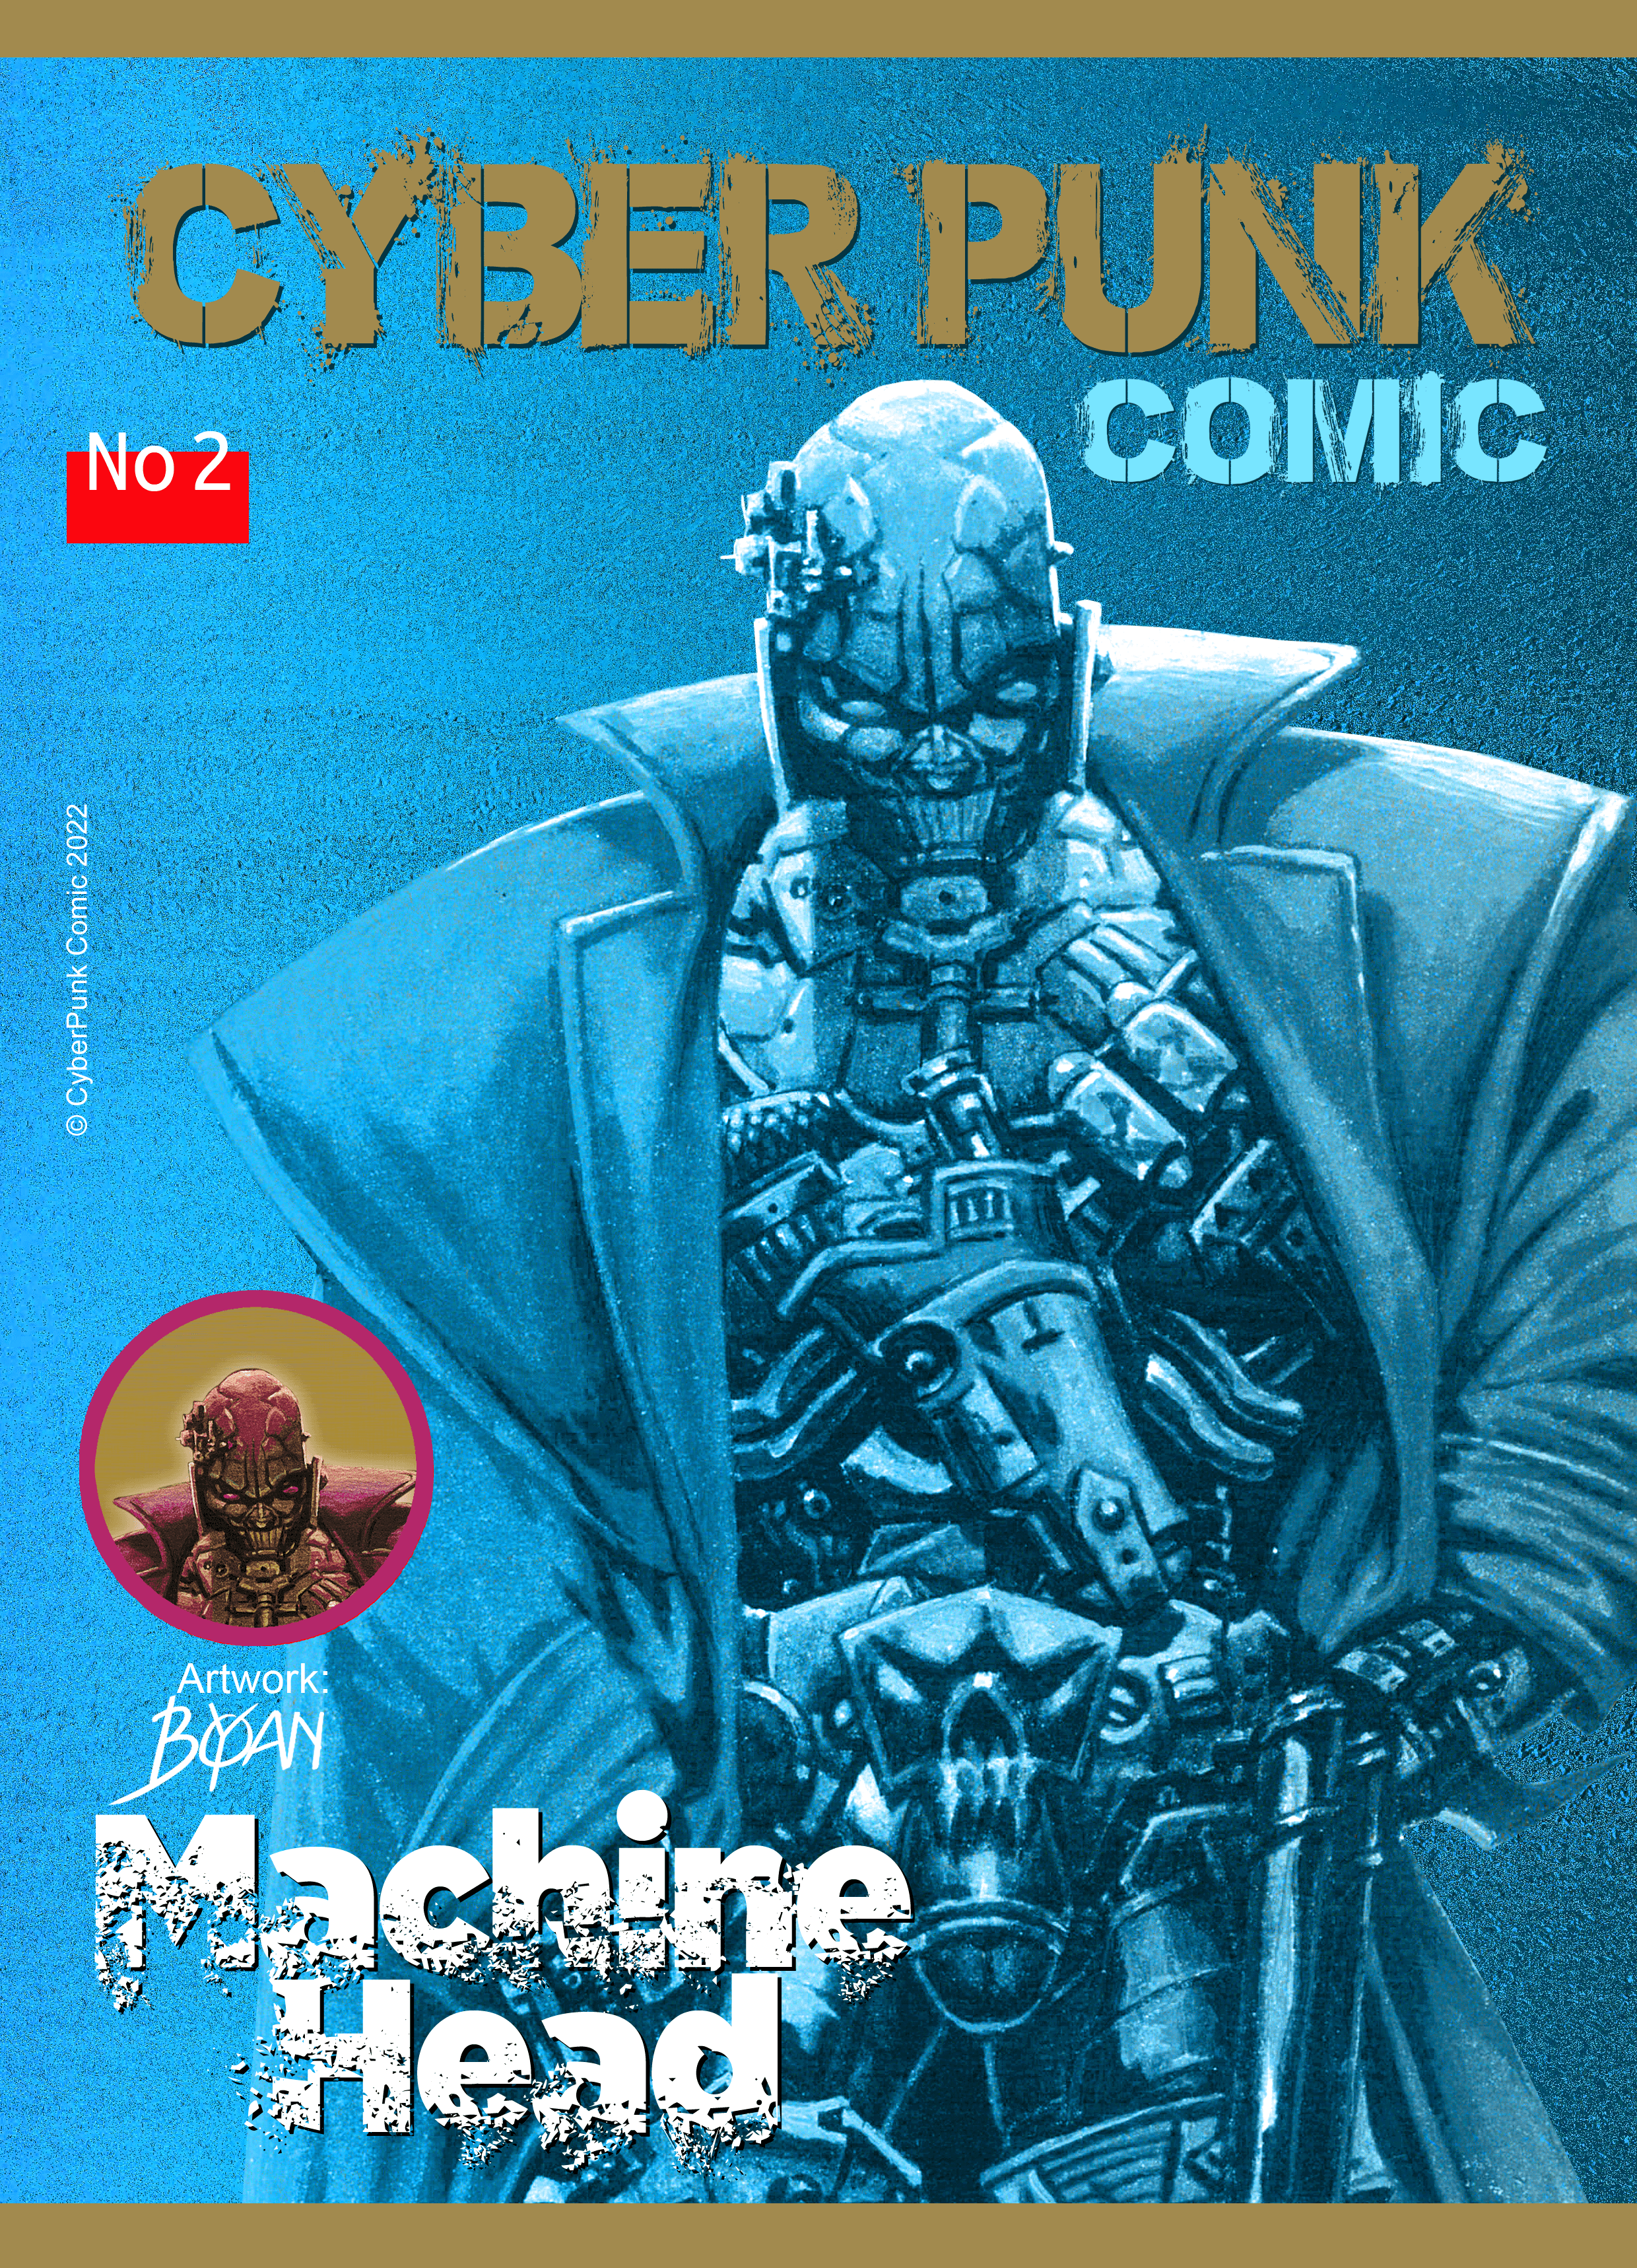 CyberPunk Comic Issue 2 #00976